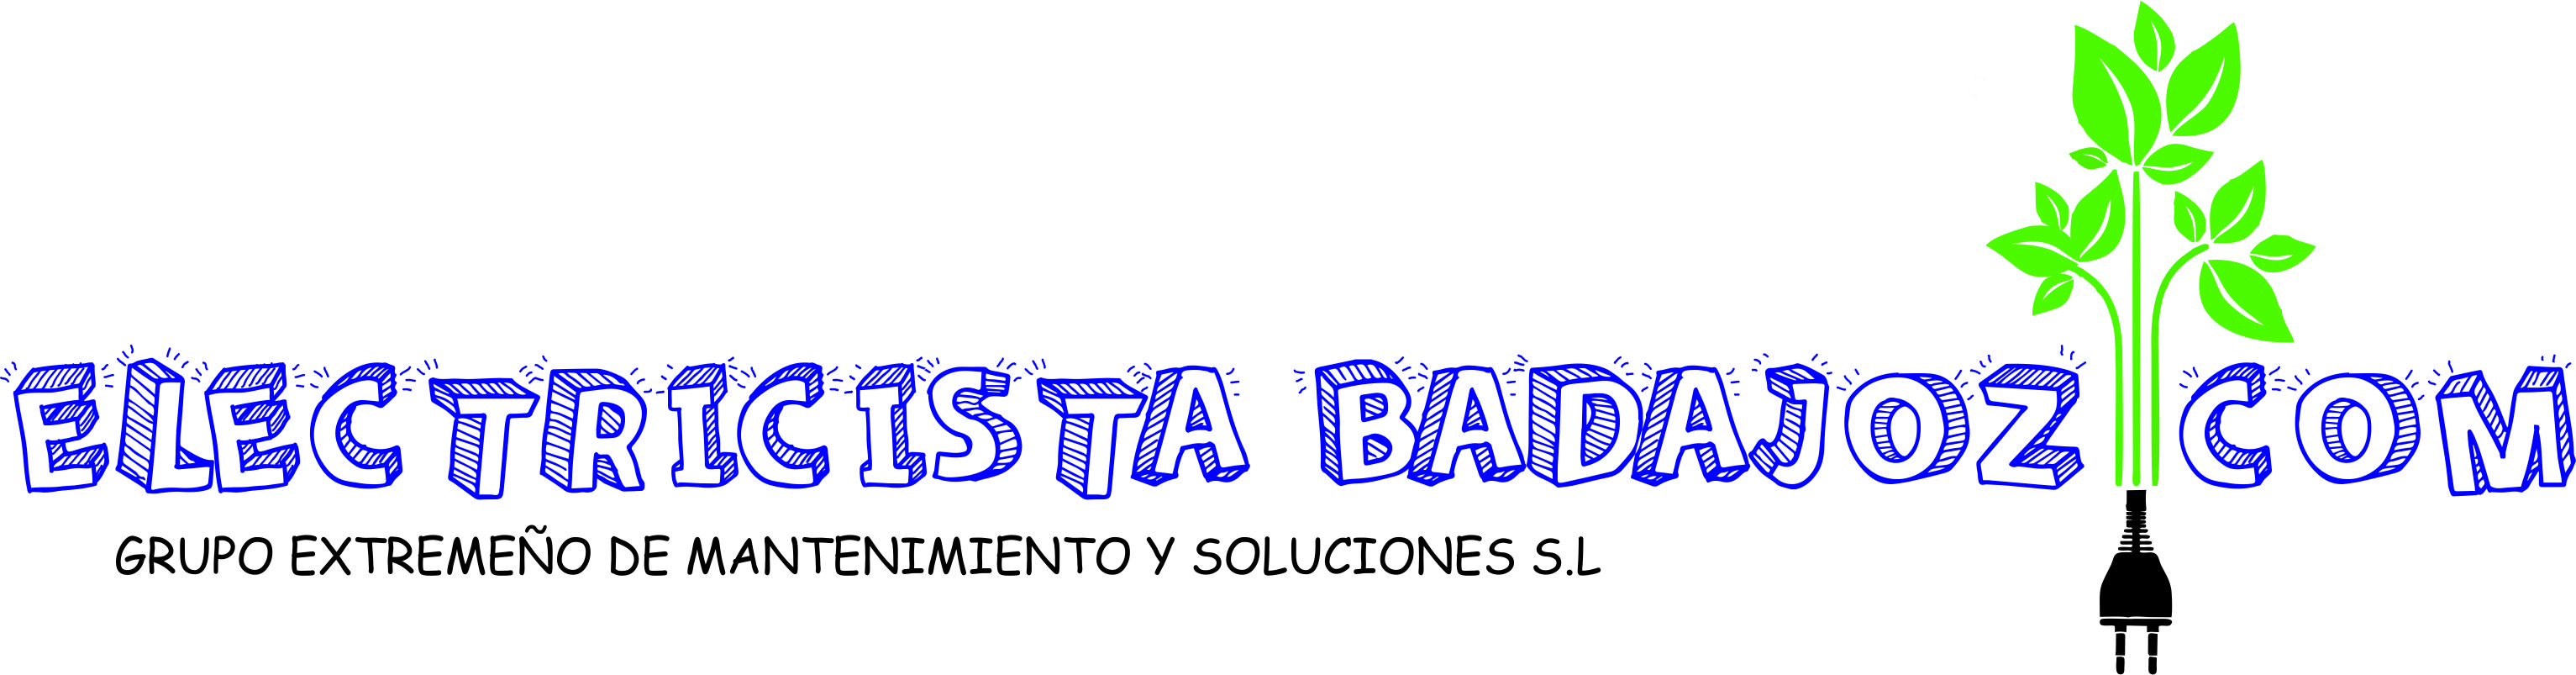 Electricista Badajoz